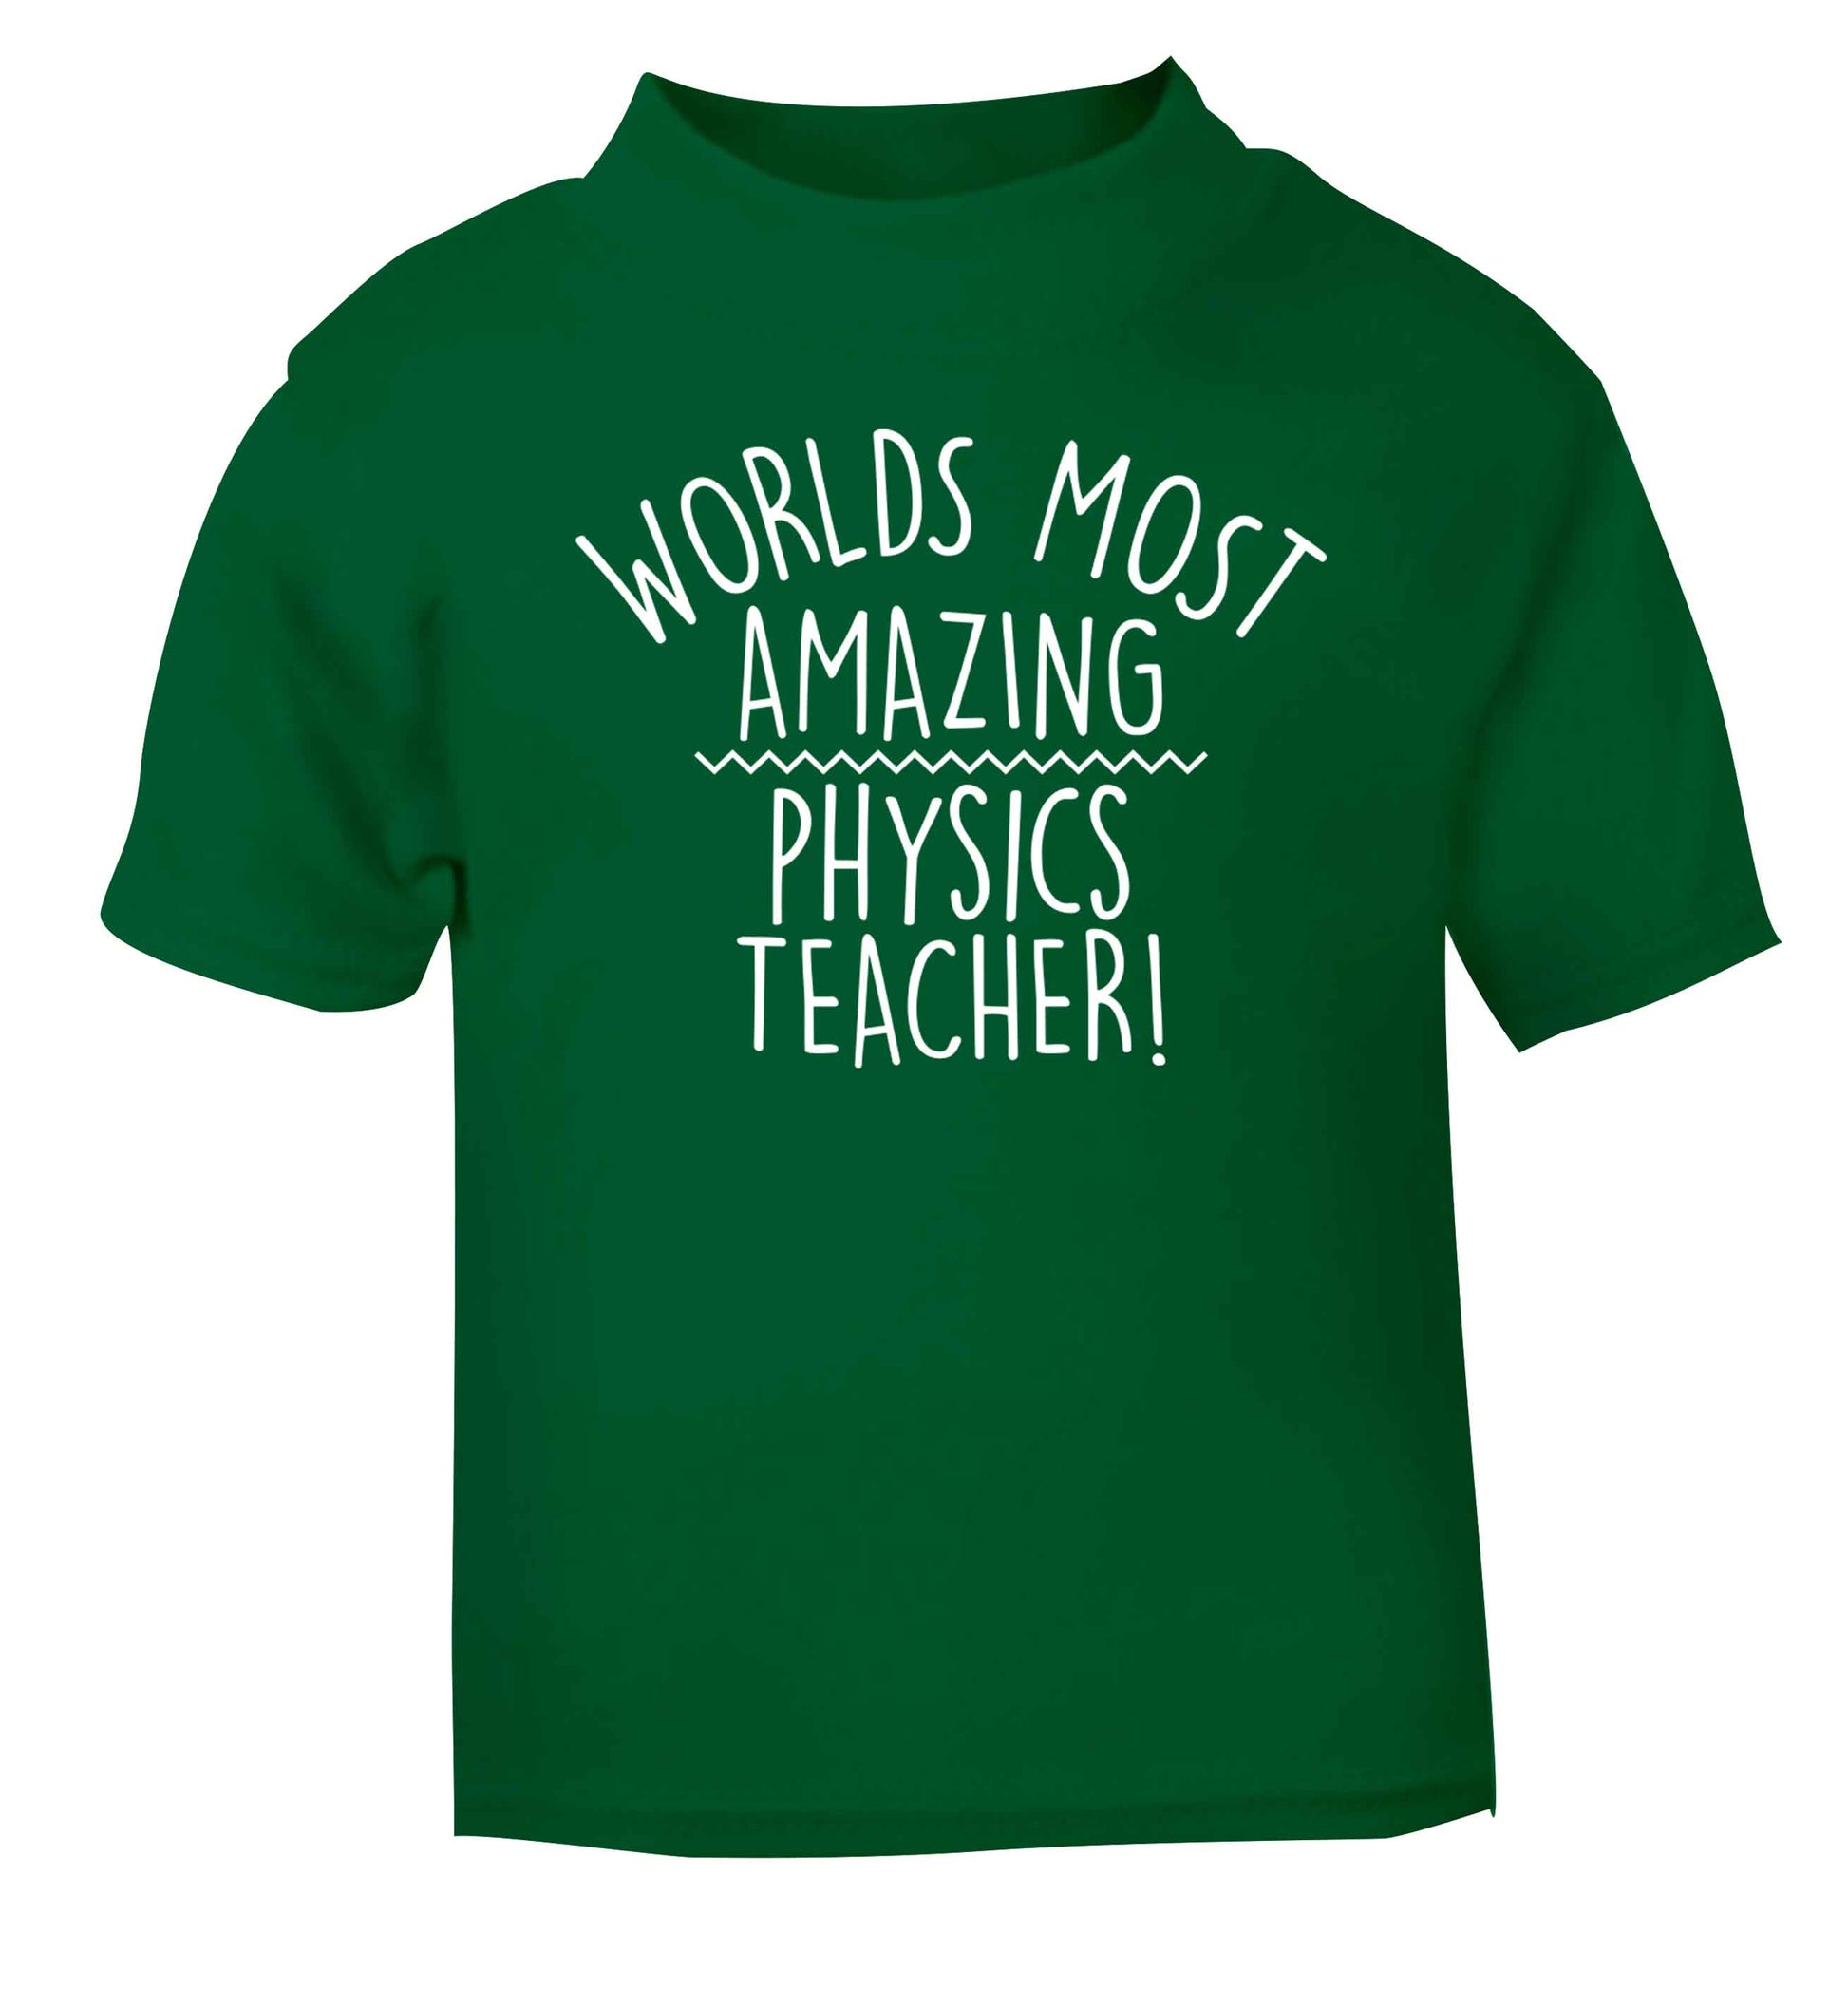 Worlds most amazing physics teacher green baby toddler Tshirt 2 Years